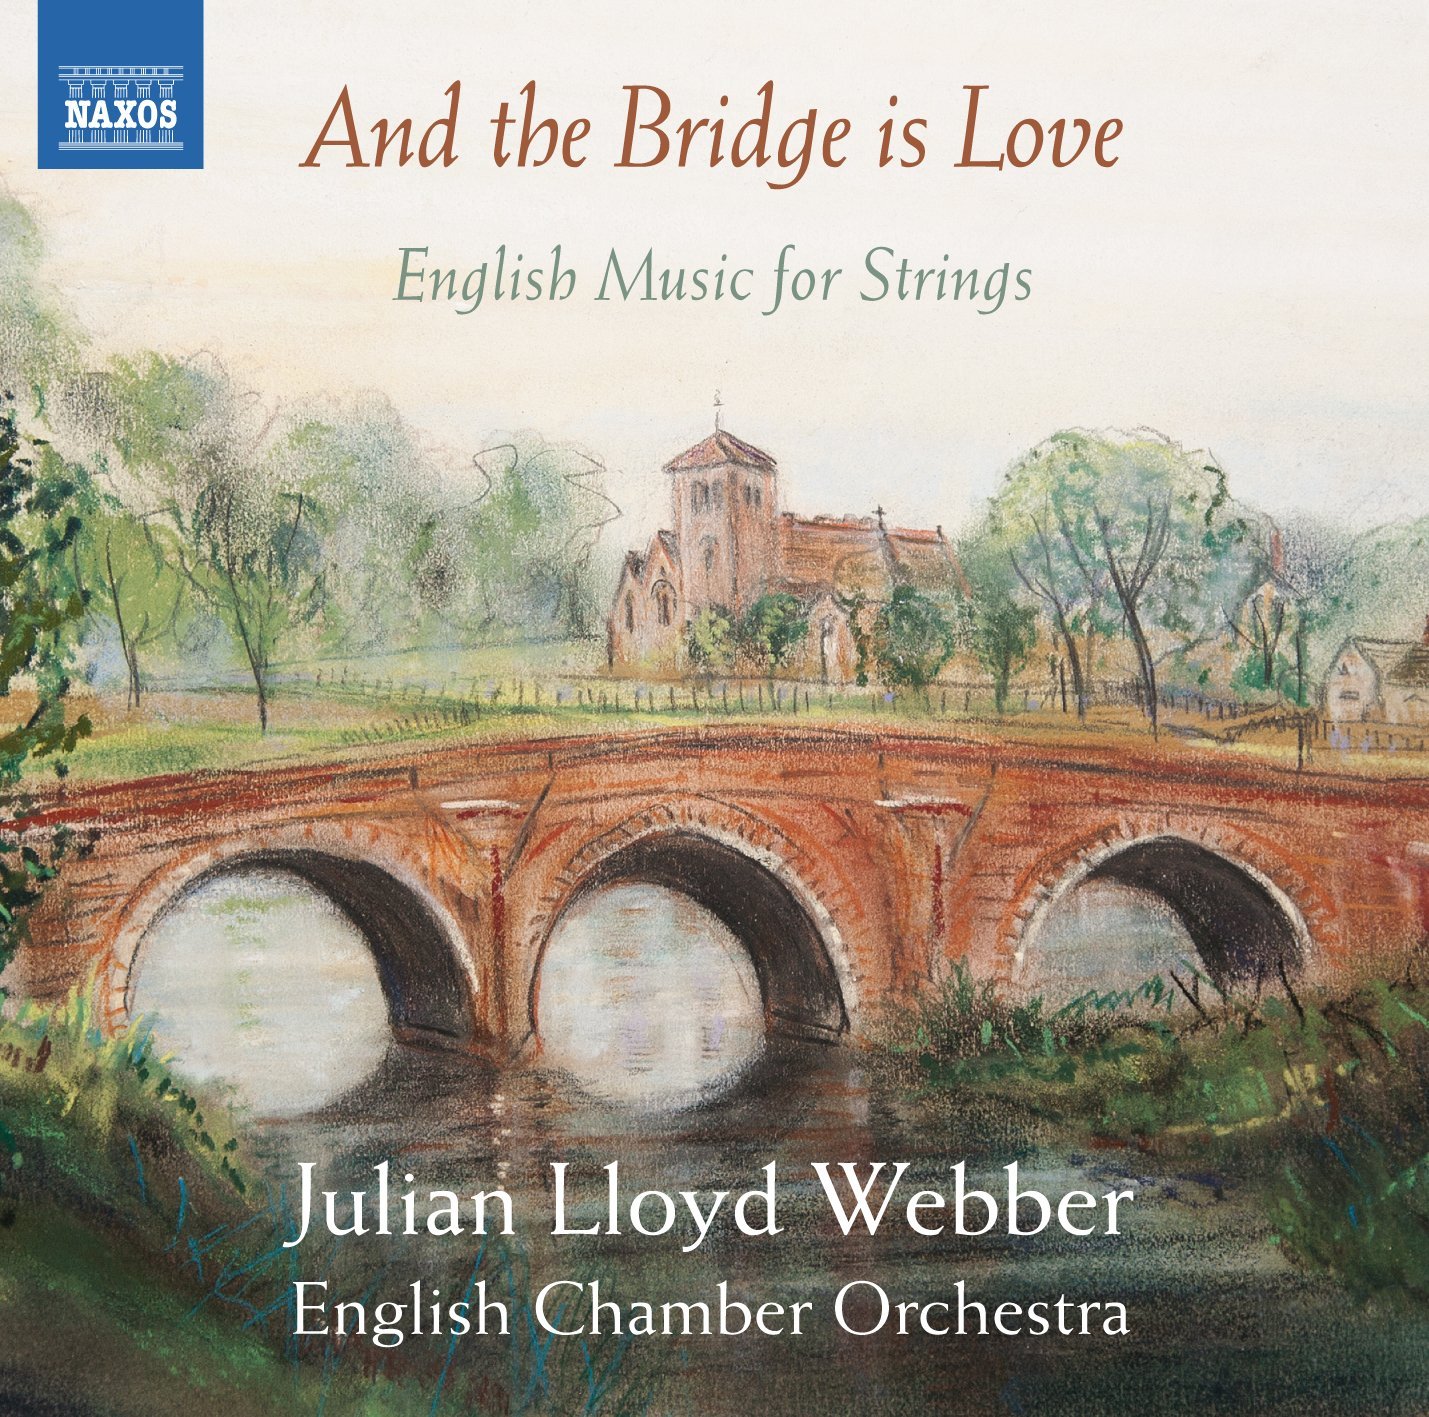 Julian Lloyd Webber - And the Bridge is Love (Music CD)